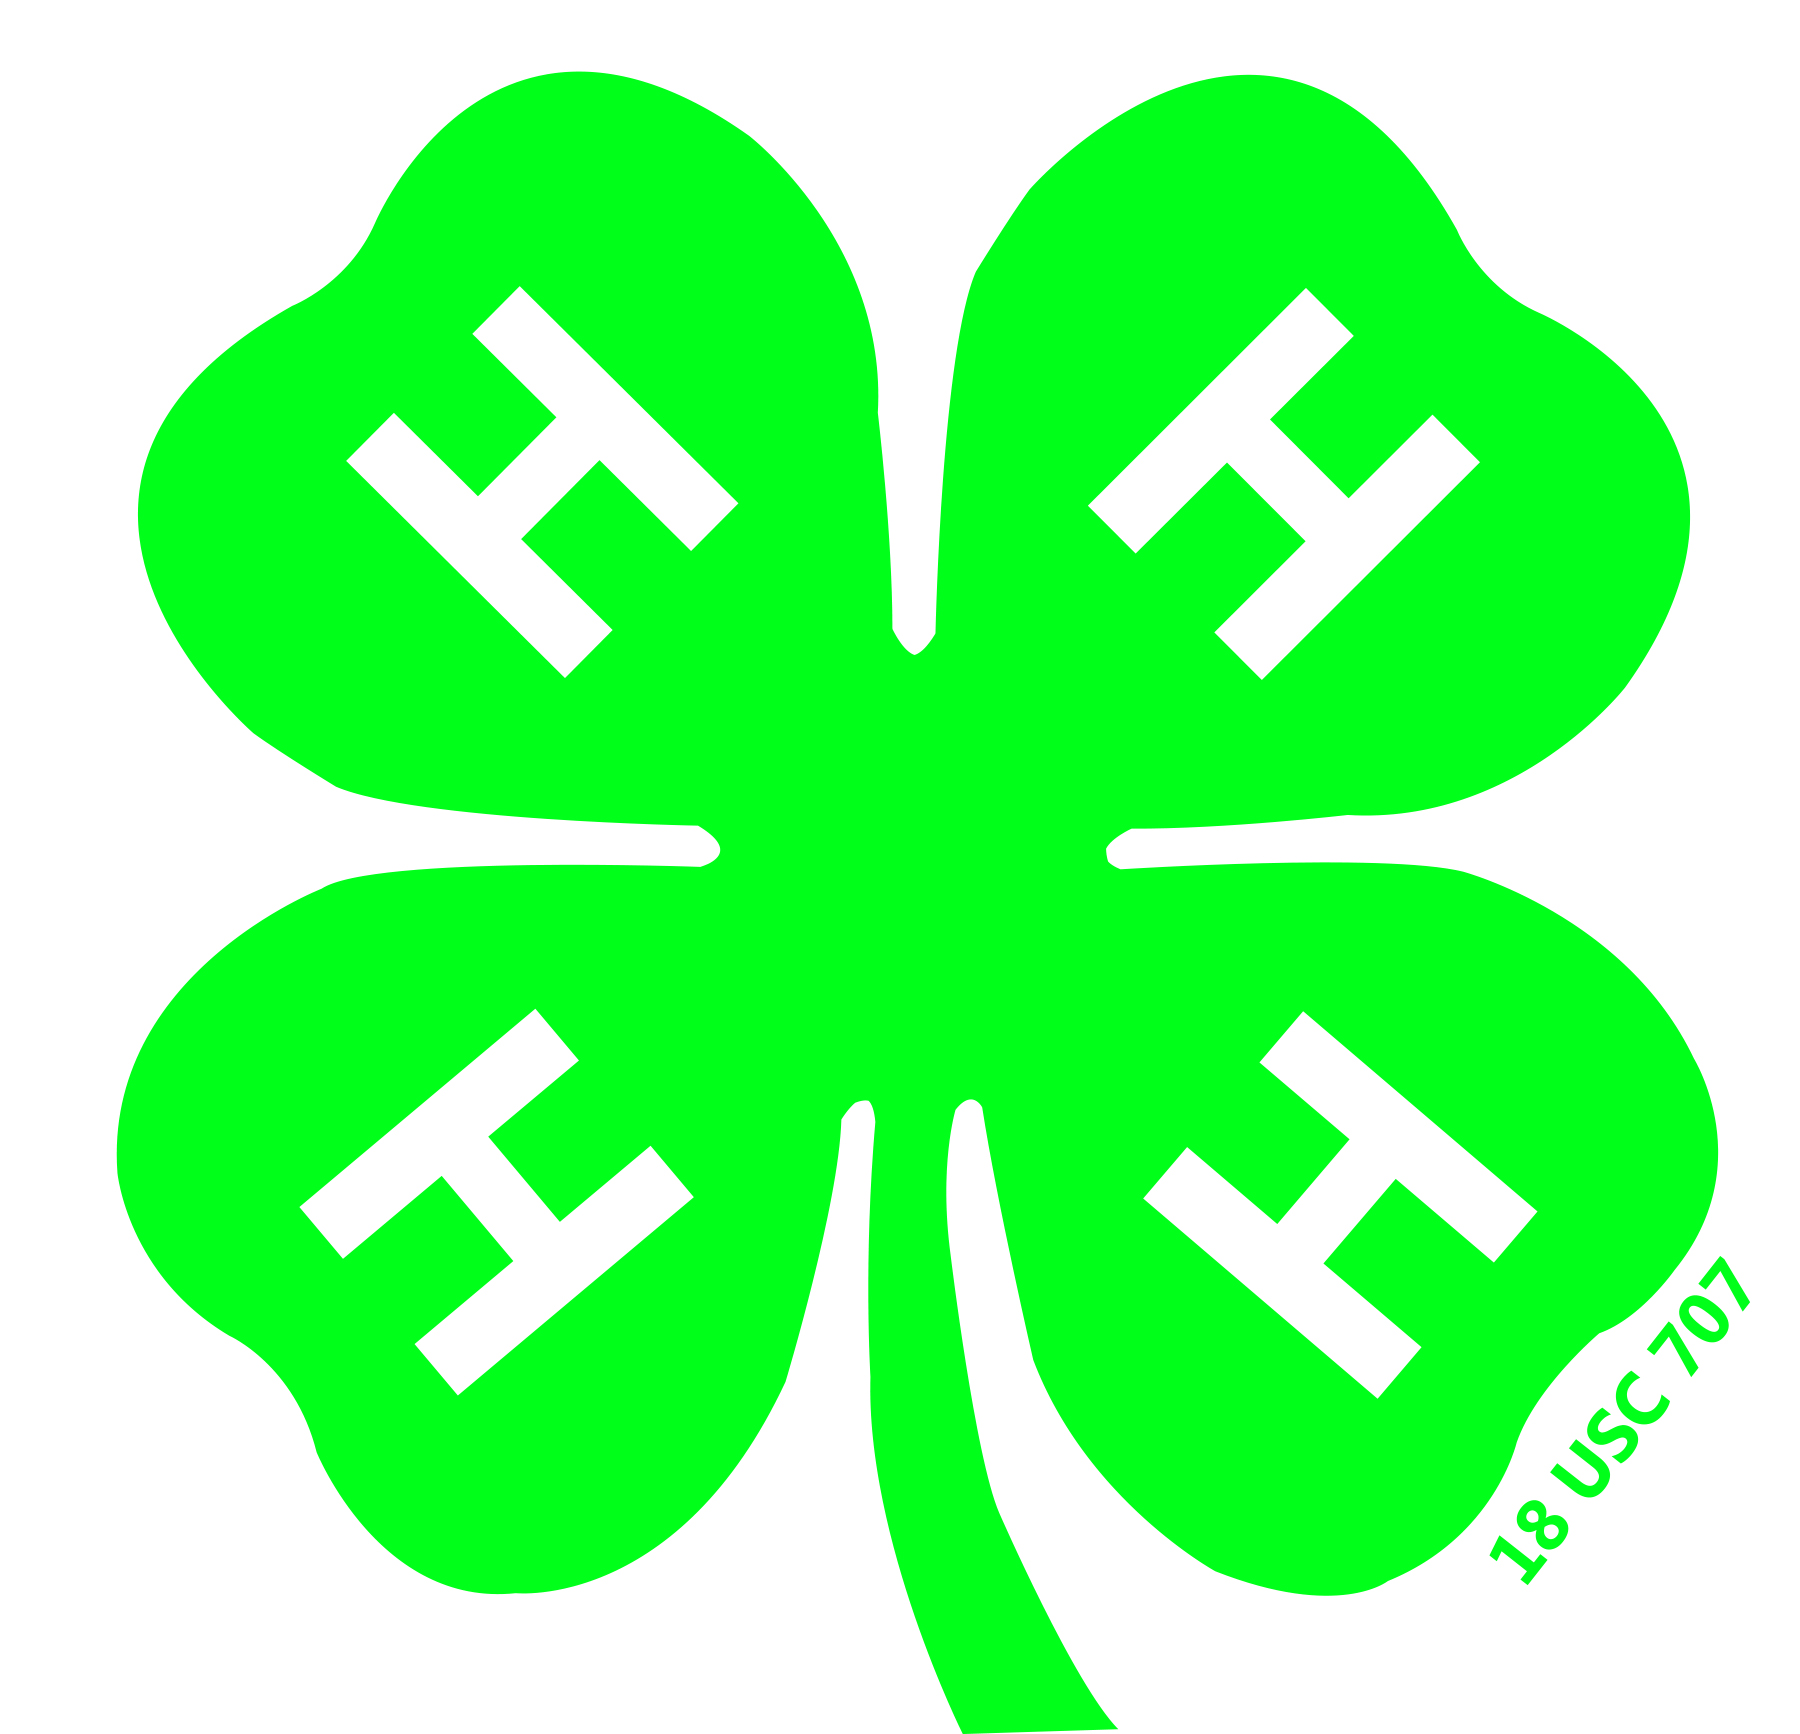 Ohio 4-H logo